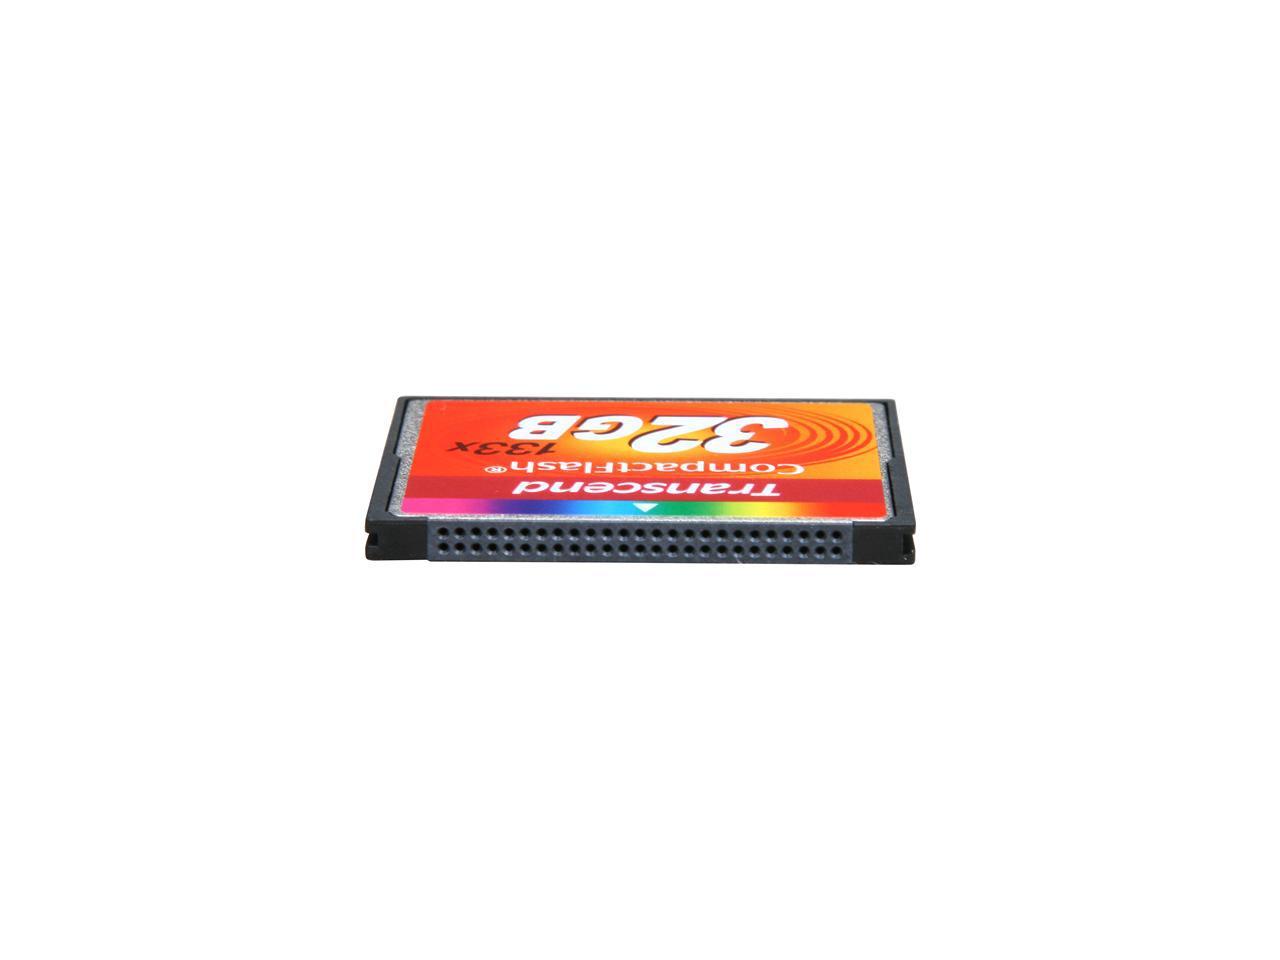 Transcend 32GB Compact Flash (CF) Flash Card Model TS32GCF133